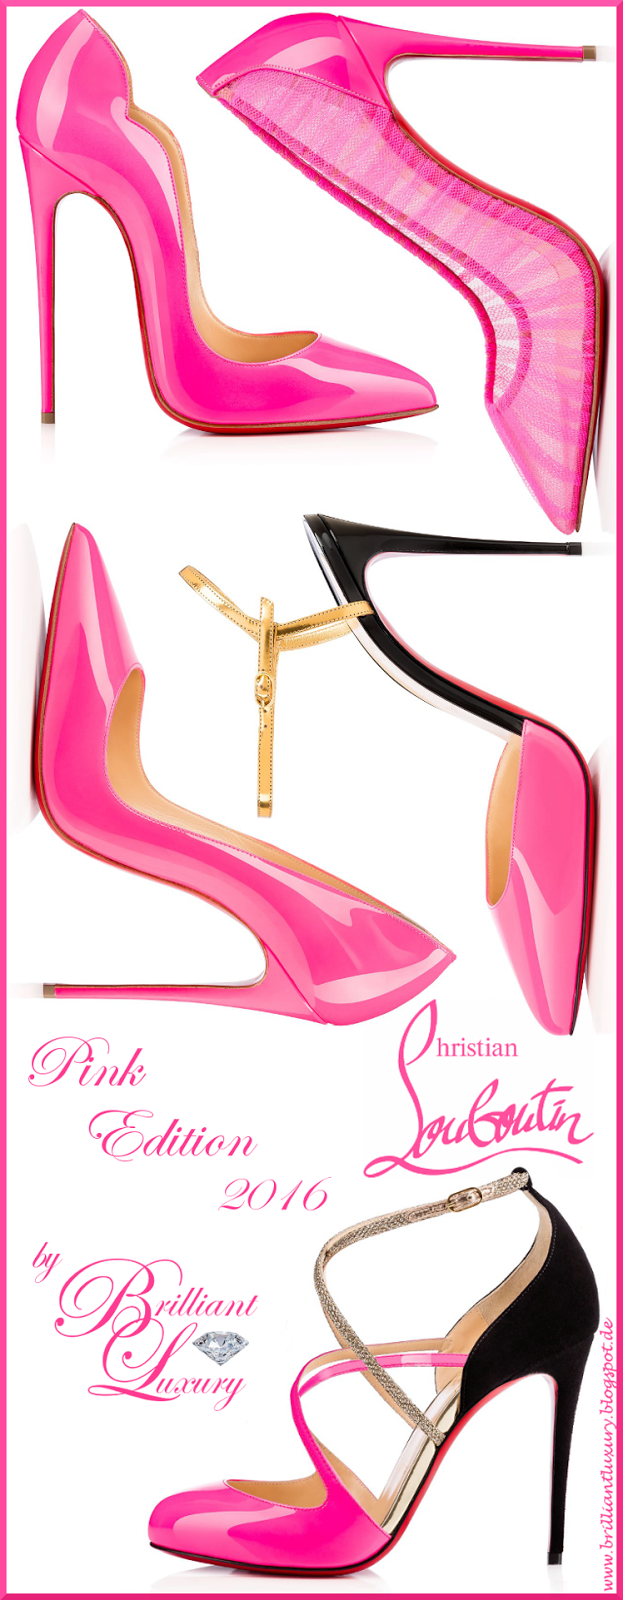 Brilliant Luxury: ♦Christian Louboutin SS 2016 ~ Pink Edition